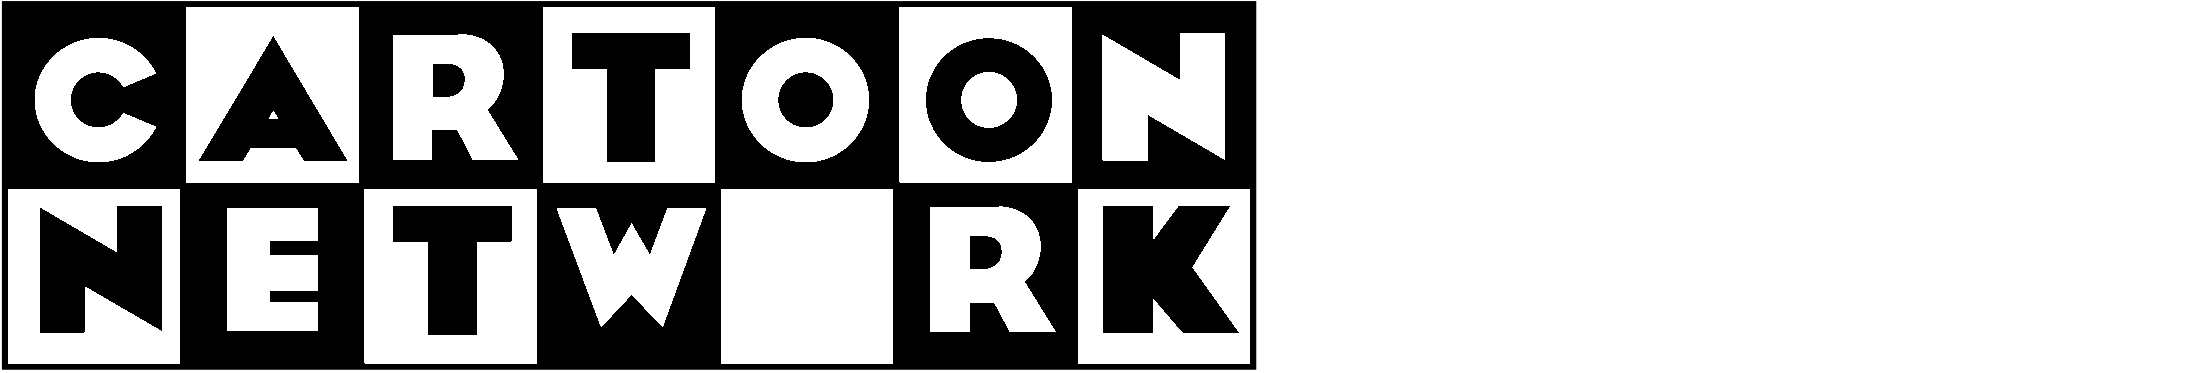 Cartoon Network Tennis Club Logo Black And White - Cartoon Network Clipart (2400x2400), Png Download